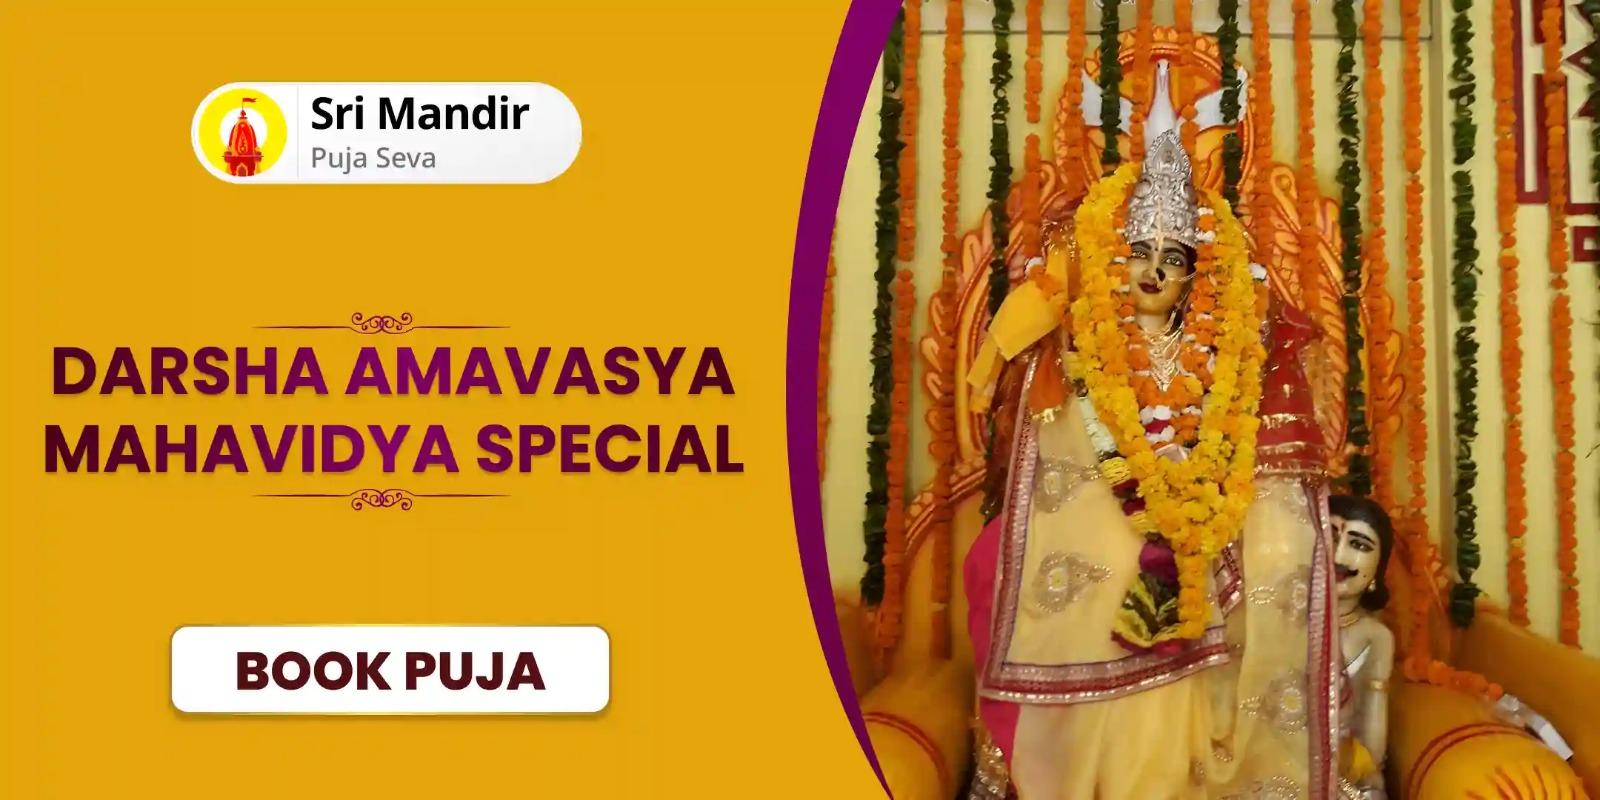 Darsha Amavasya Mahavidya Special 36,000 Maa Bagalamukhi Mool Mantra Jaap and Havan for Victory Over Enemies, Protection from Life-Threatening Diseases and Accidents